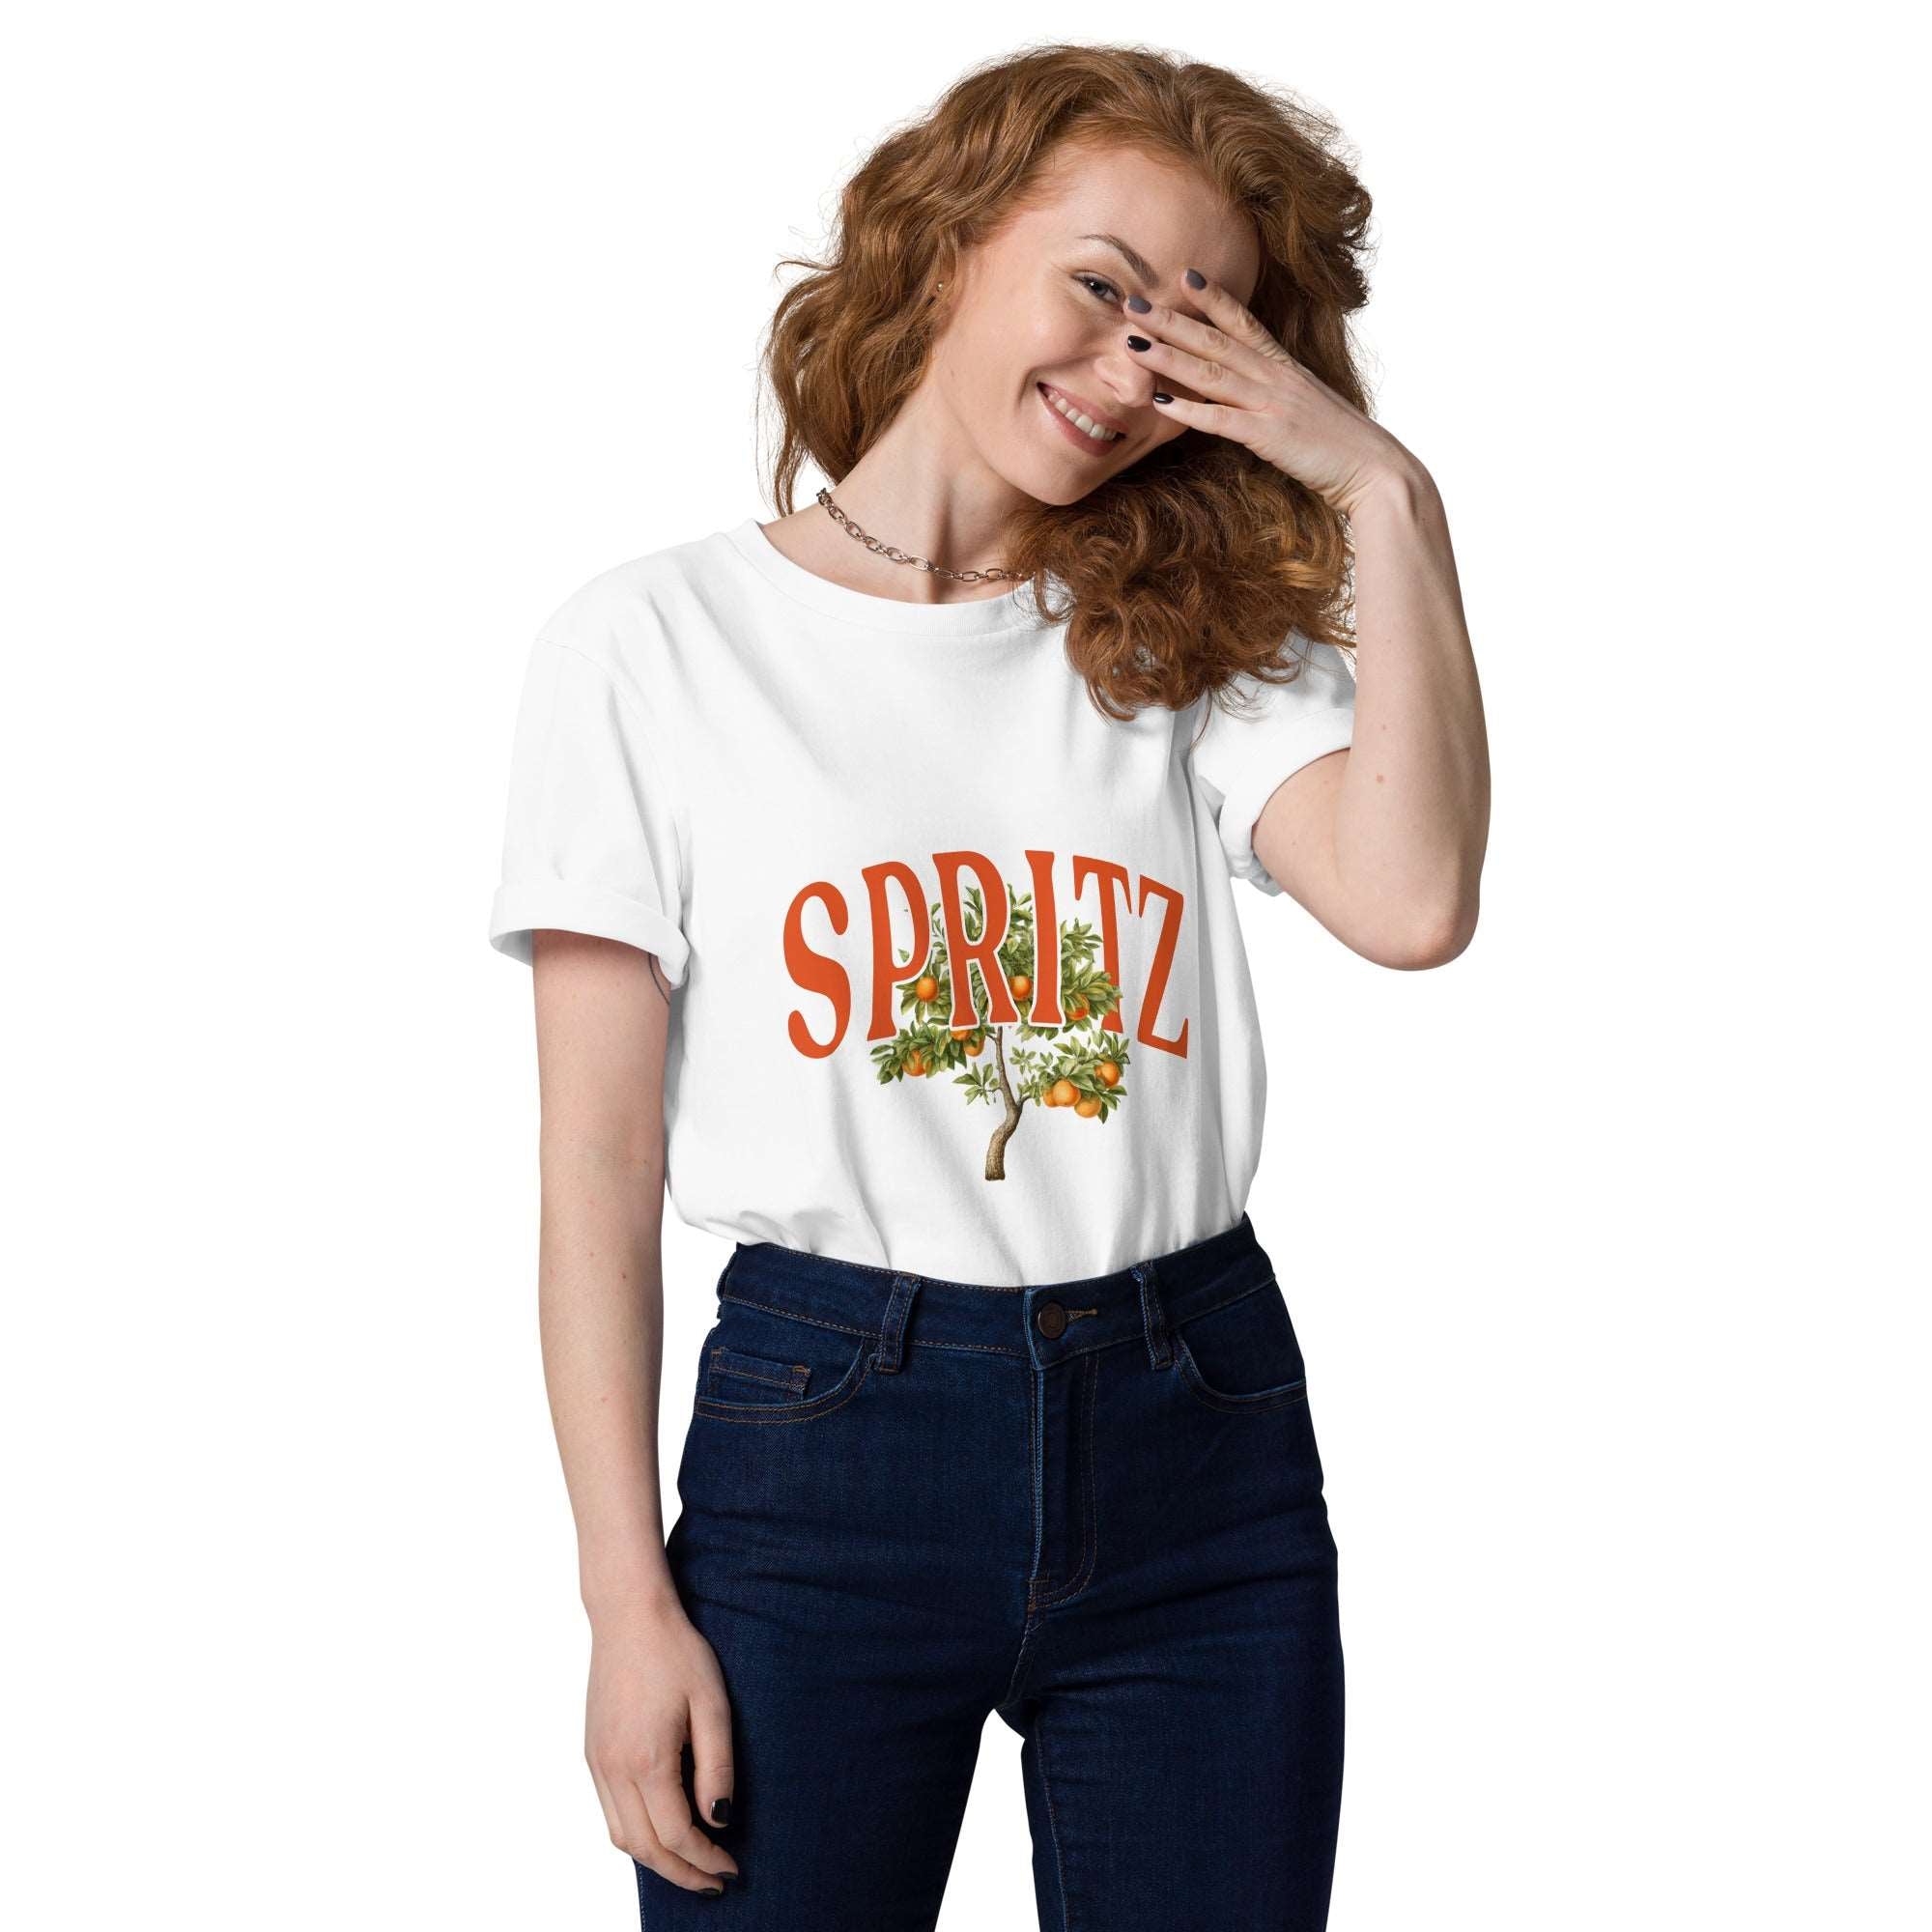 Spritz - Organic T-shirt